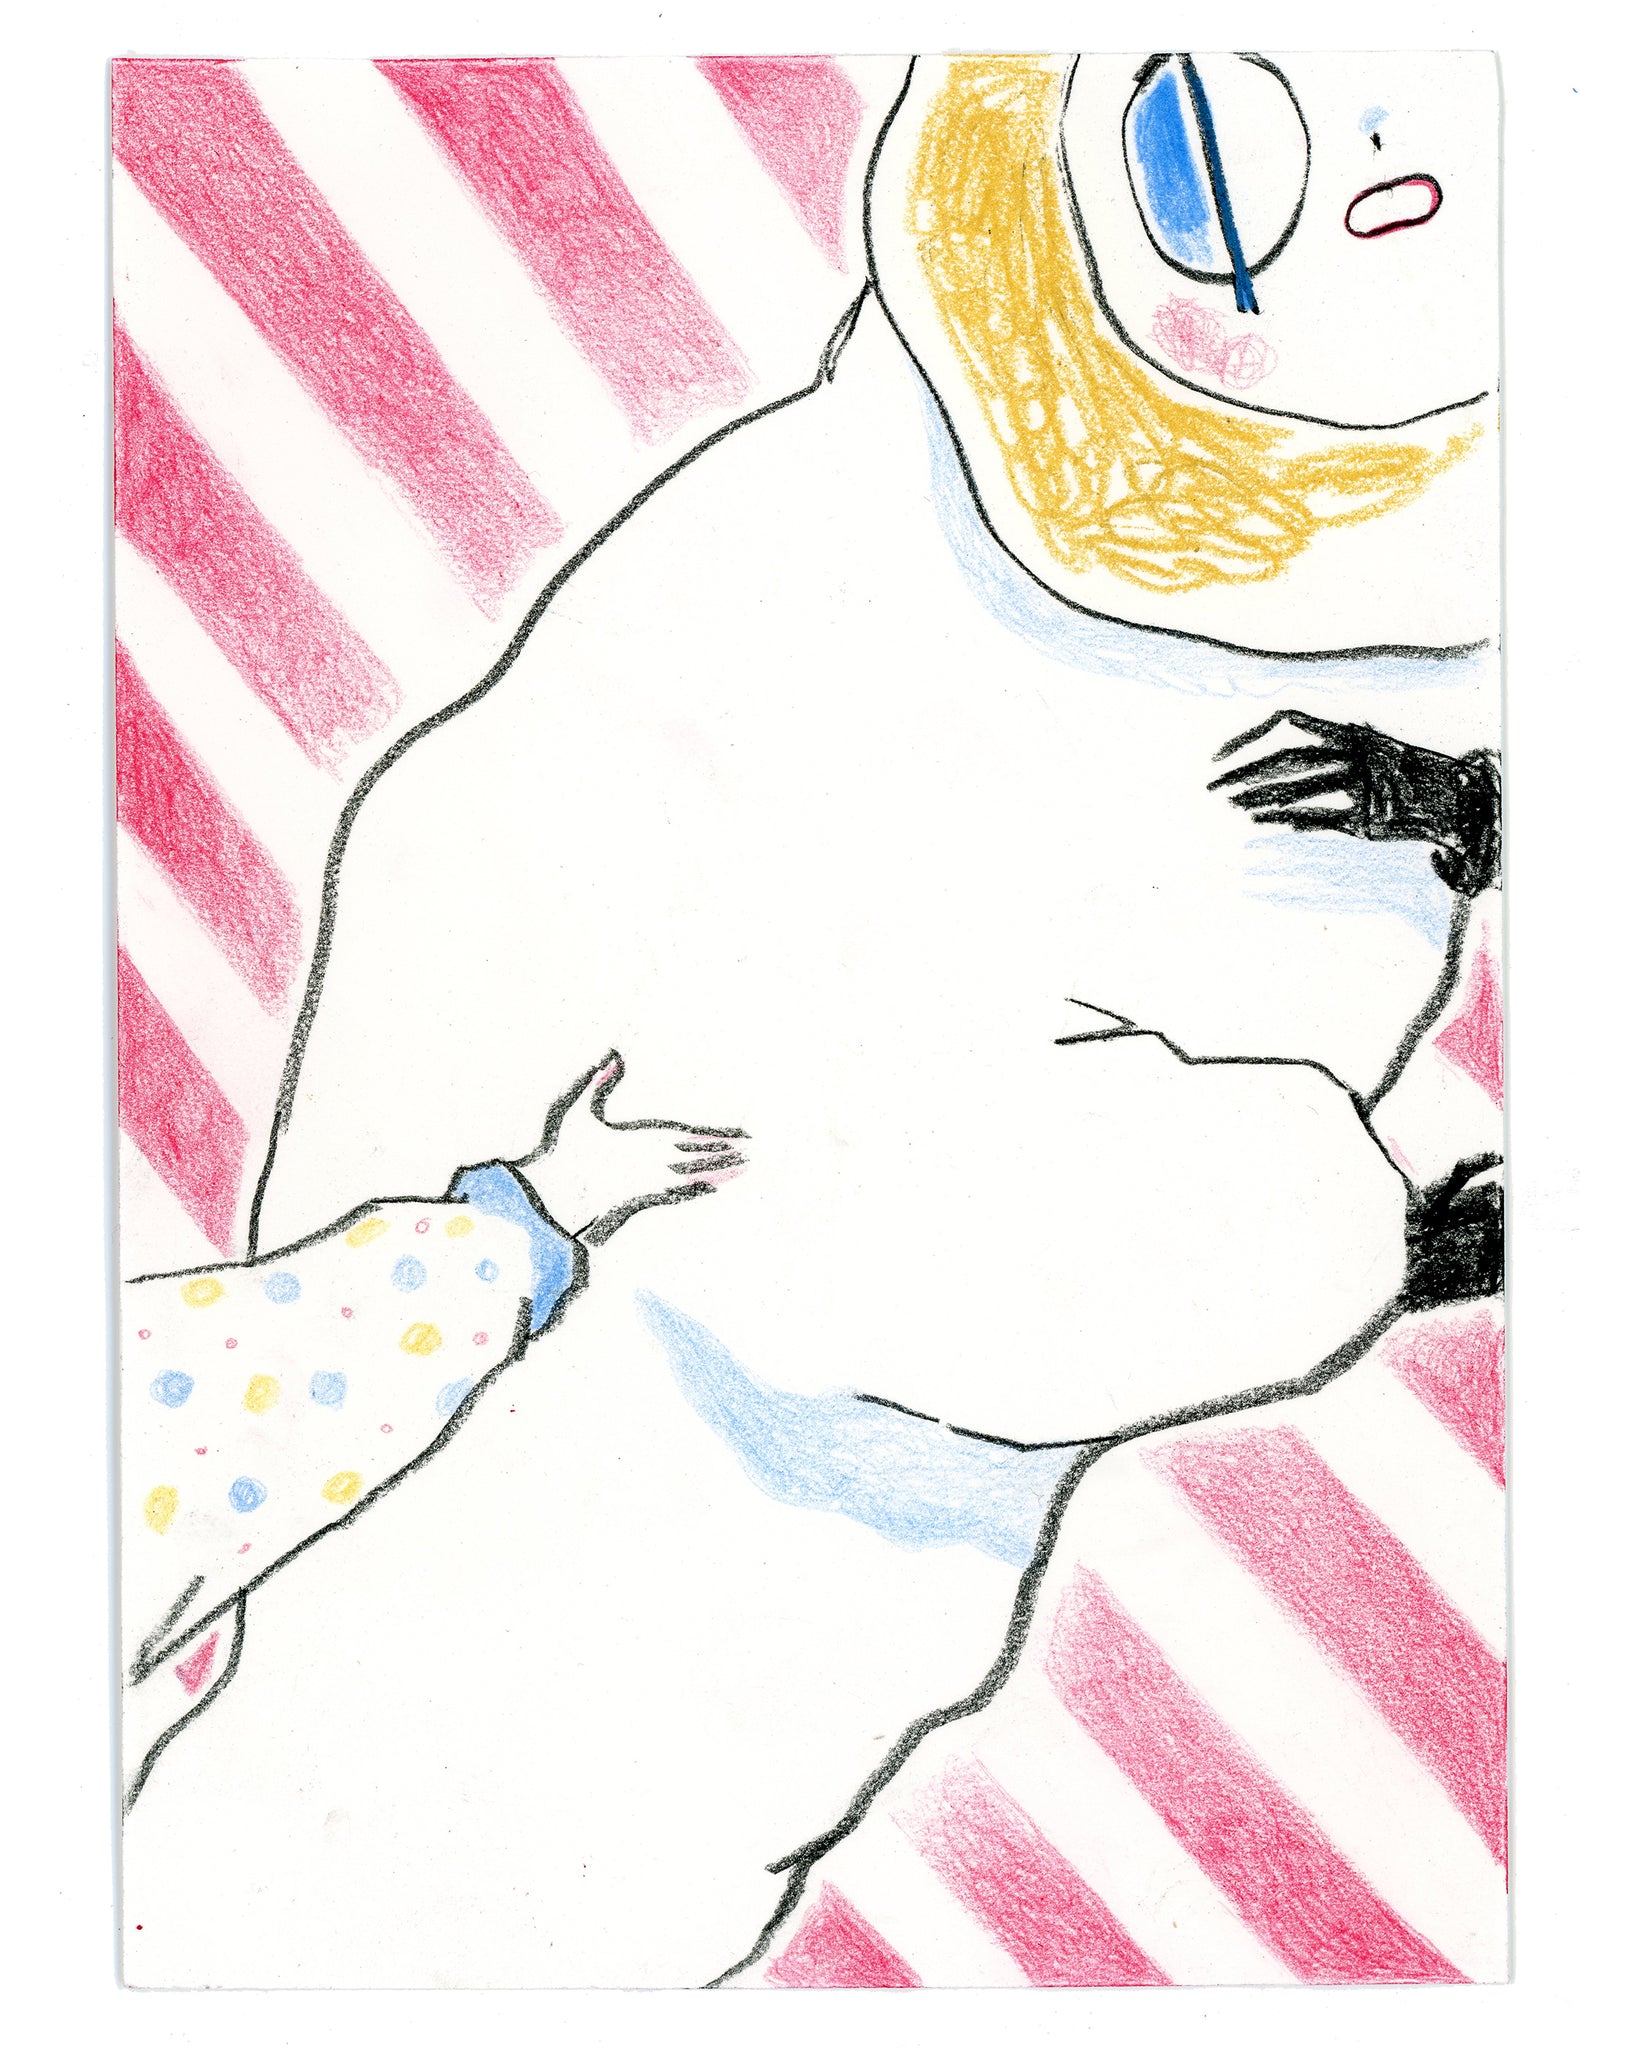 Drawing #16: "Holsomclown + Child: Take My Hand"